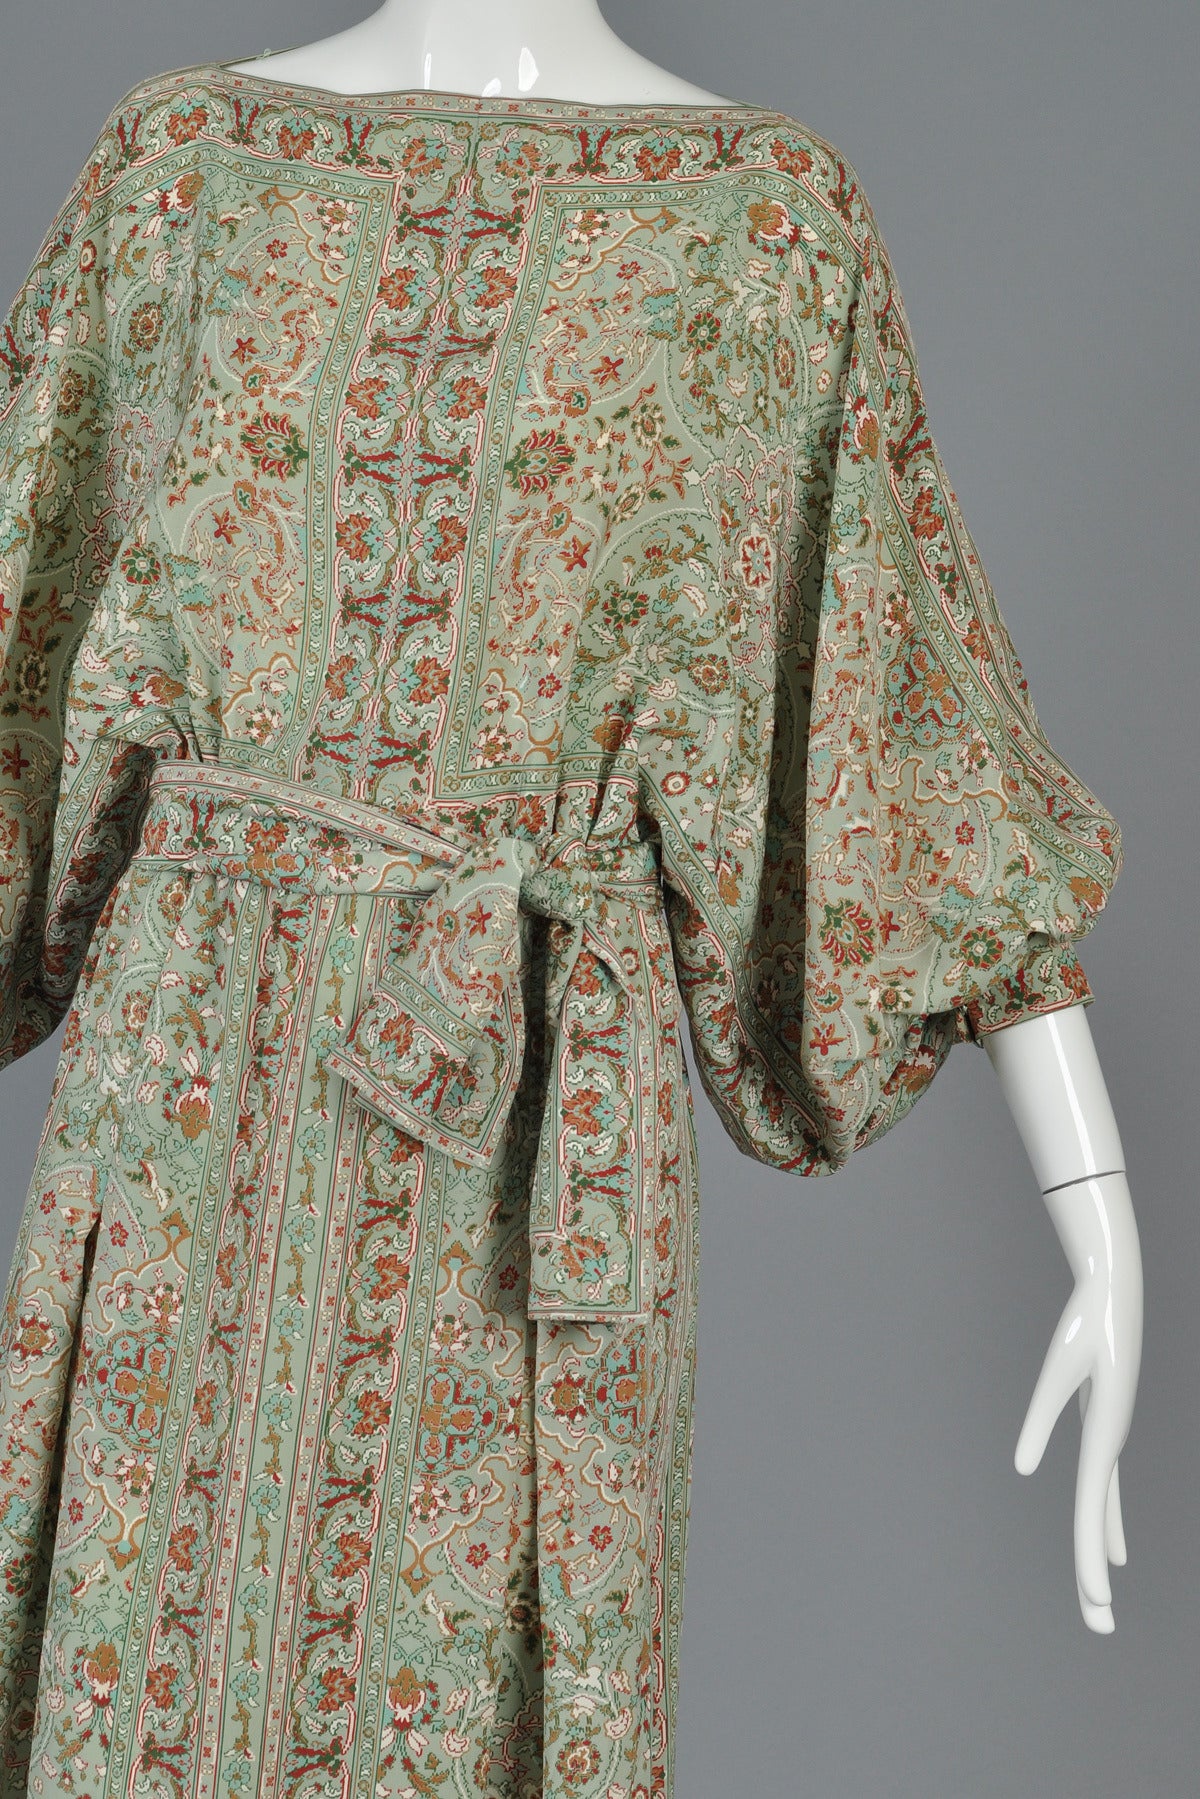 Women's La Mendola 1970's Ethnic Silk Maxi Dress with Blouson Sleeves